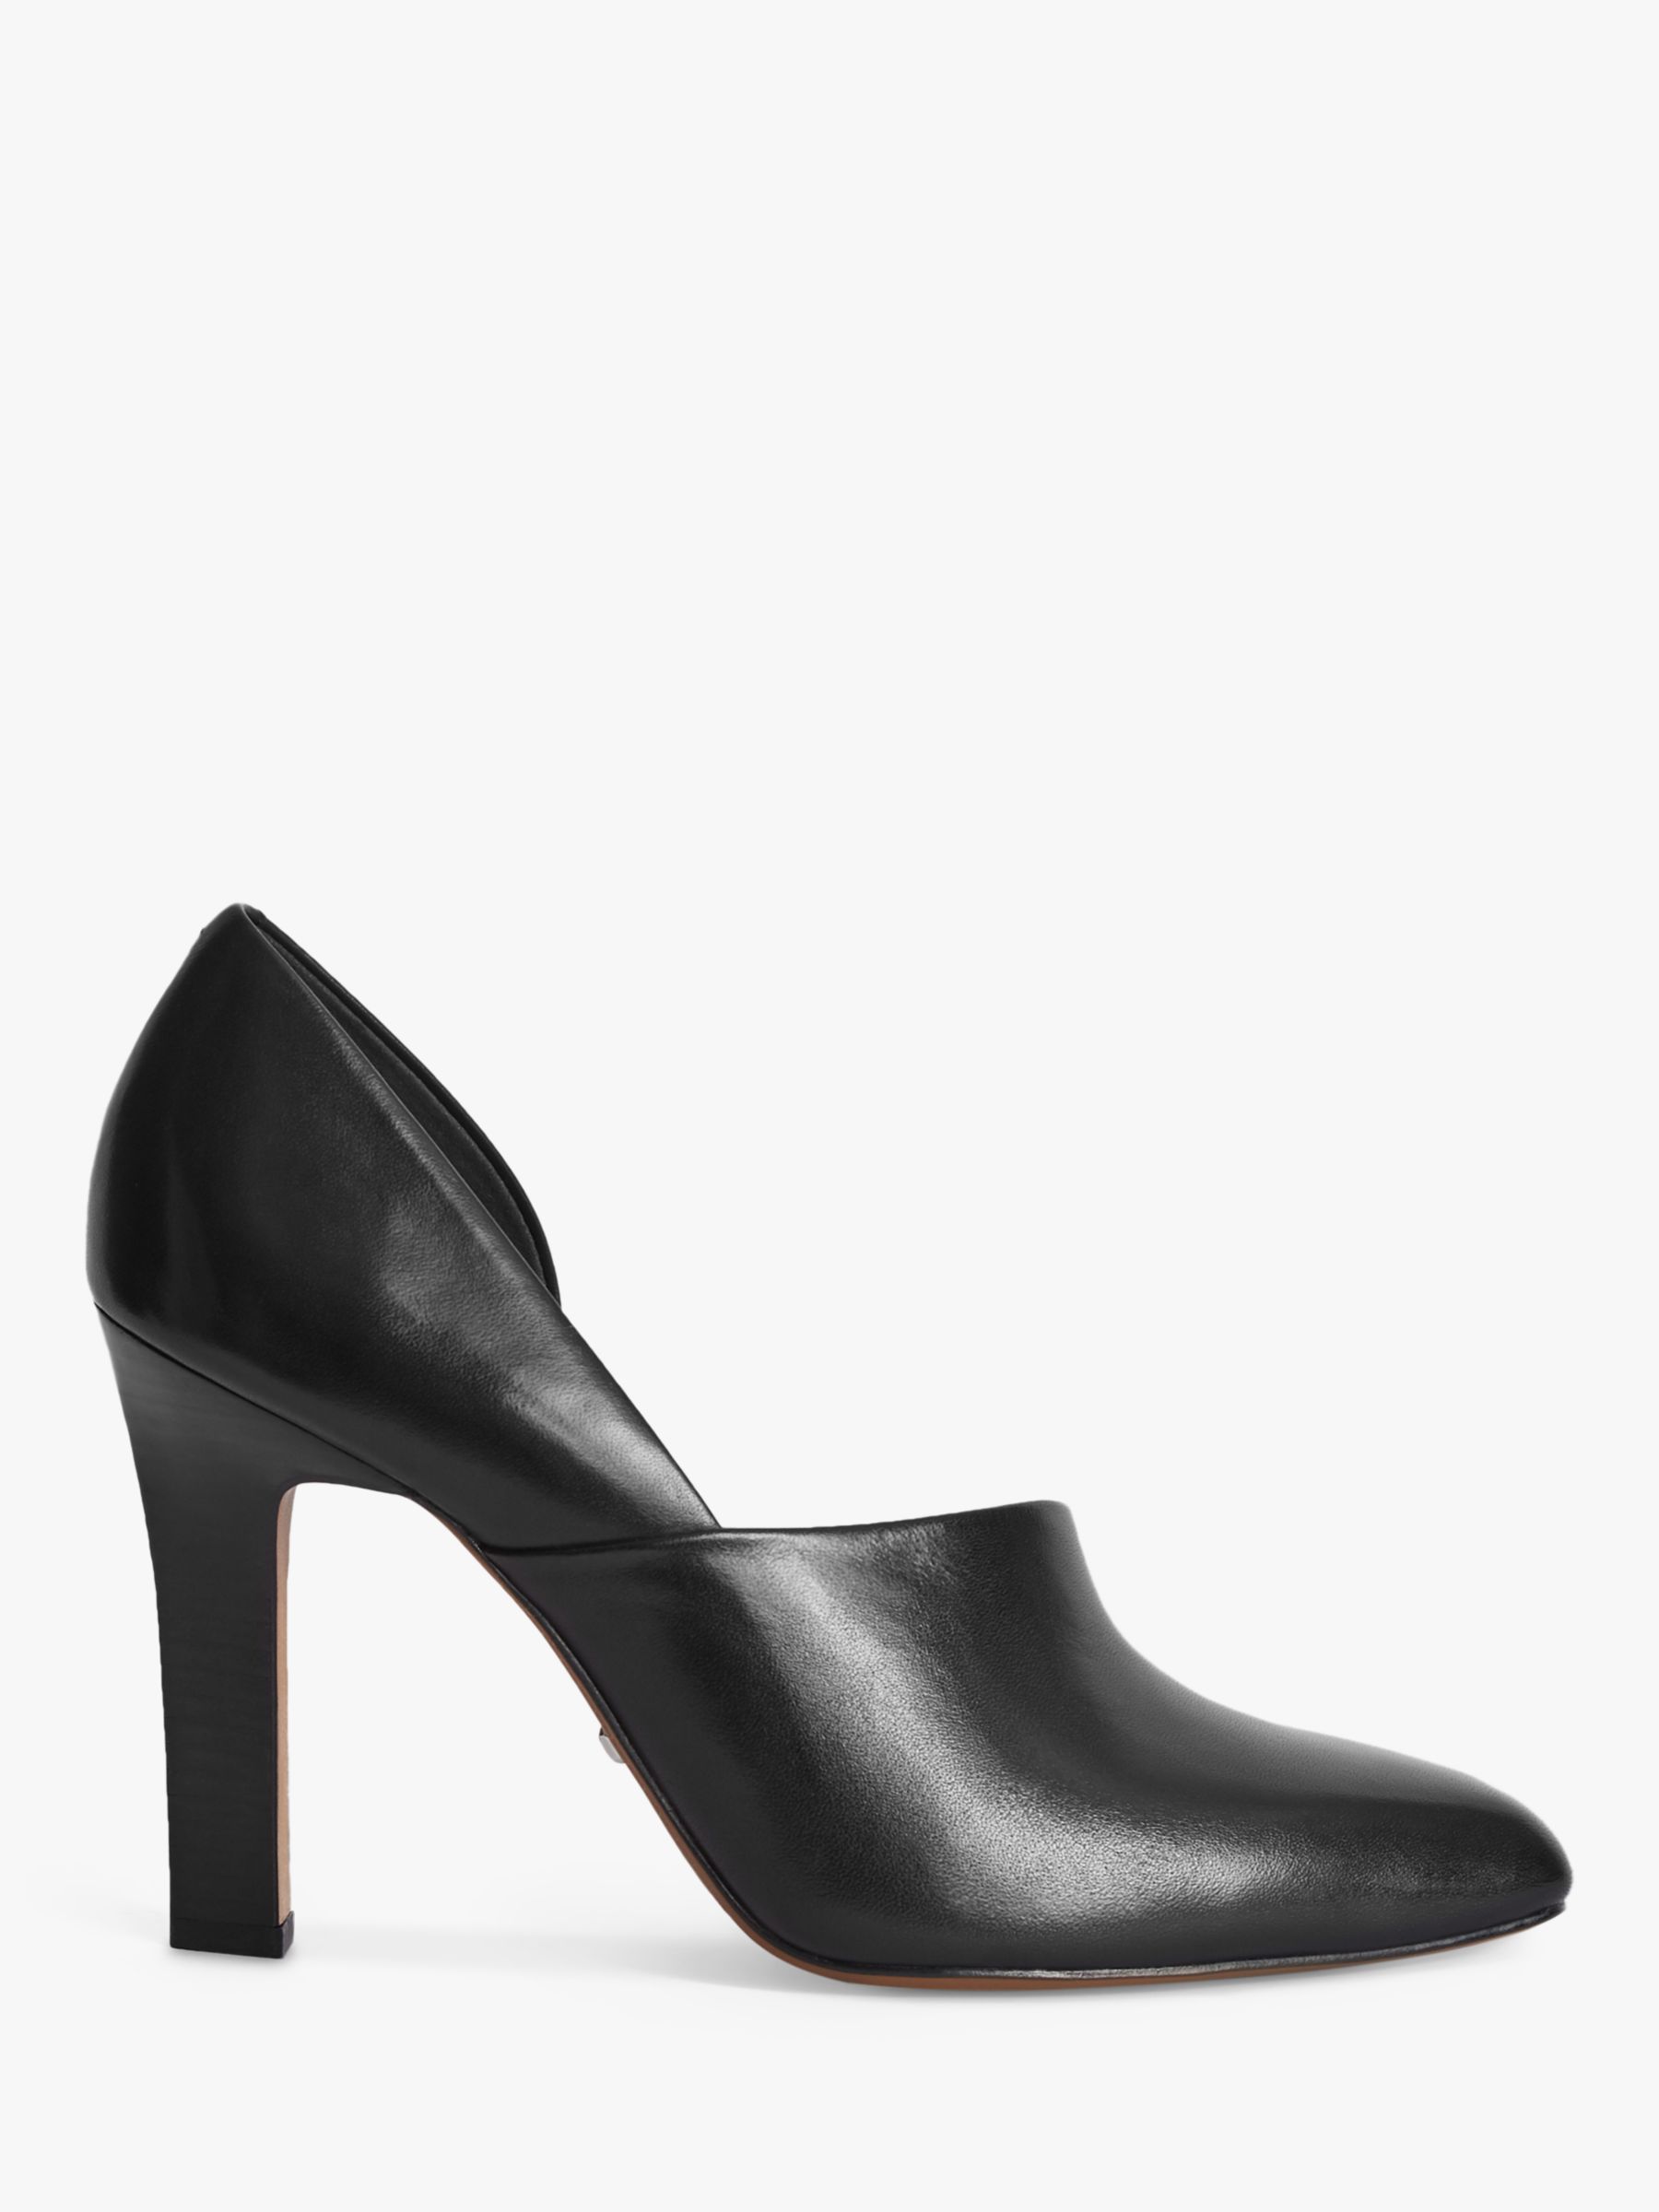 leather high heel pumps